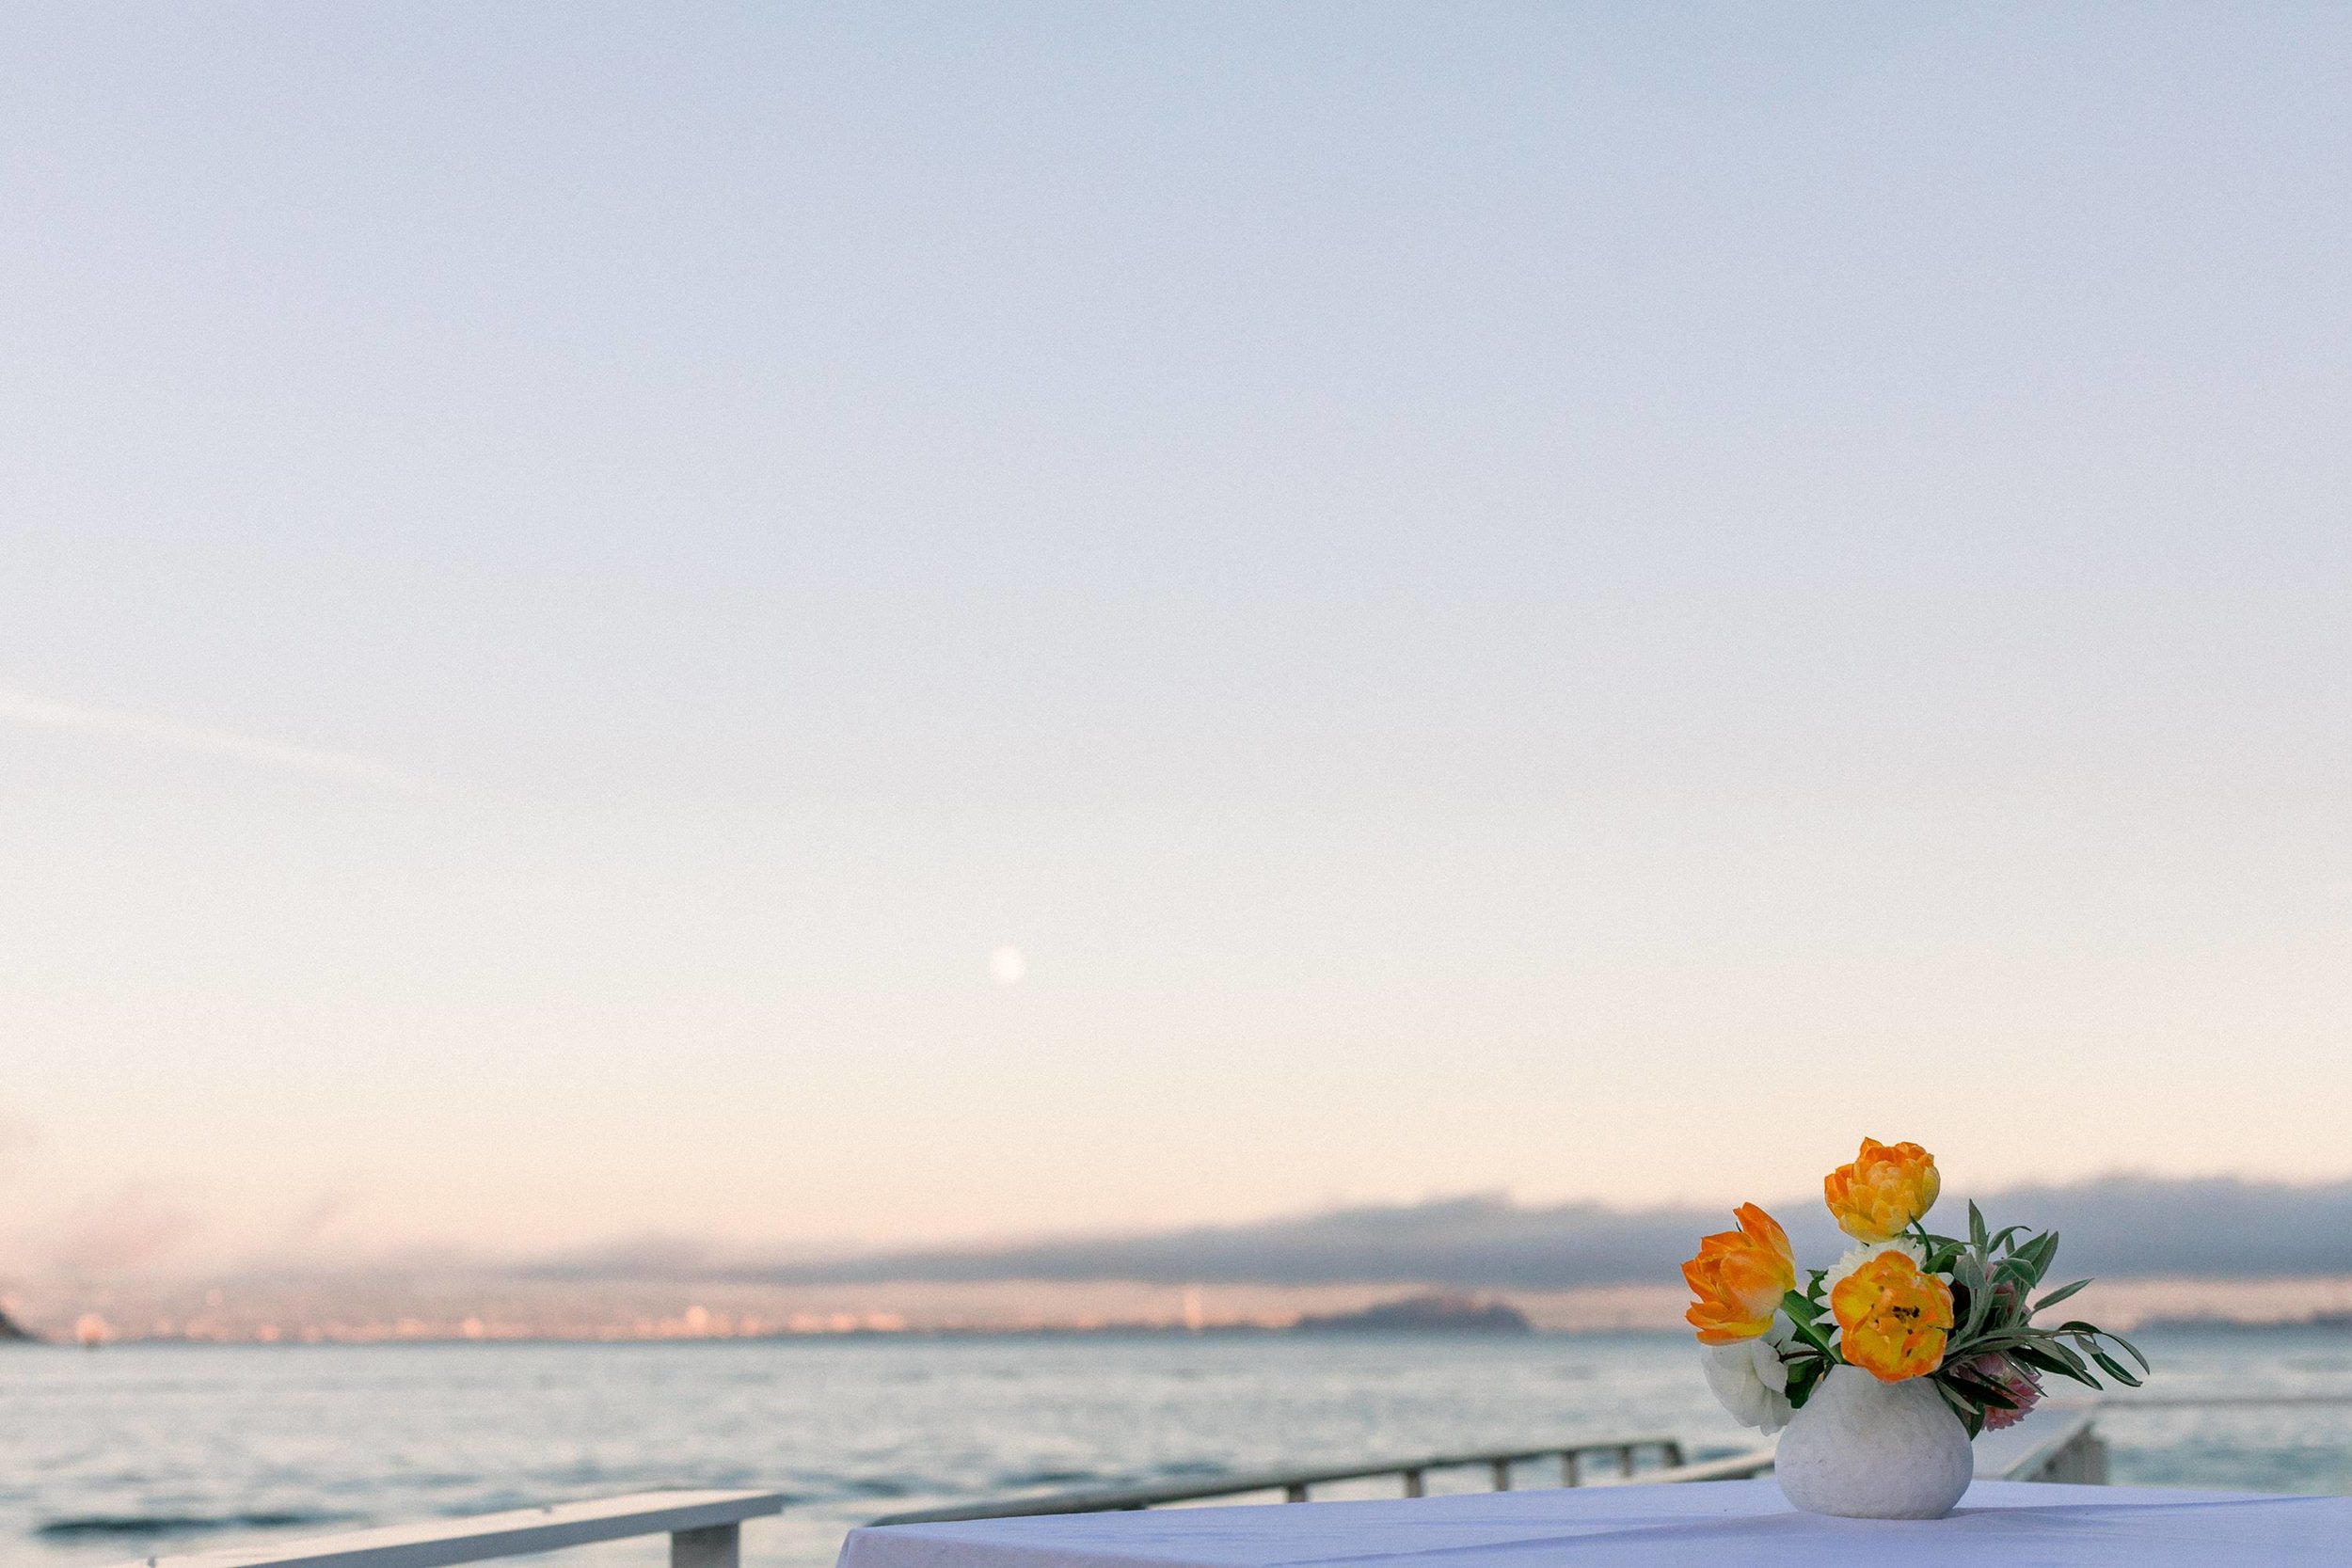 092218_AK_Sausalito-Yacht-Club-Wedding_Buena-Lane-Photography_429.jpg